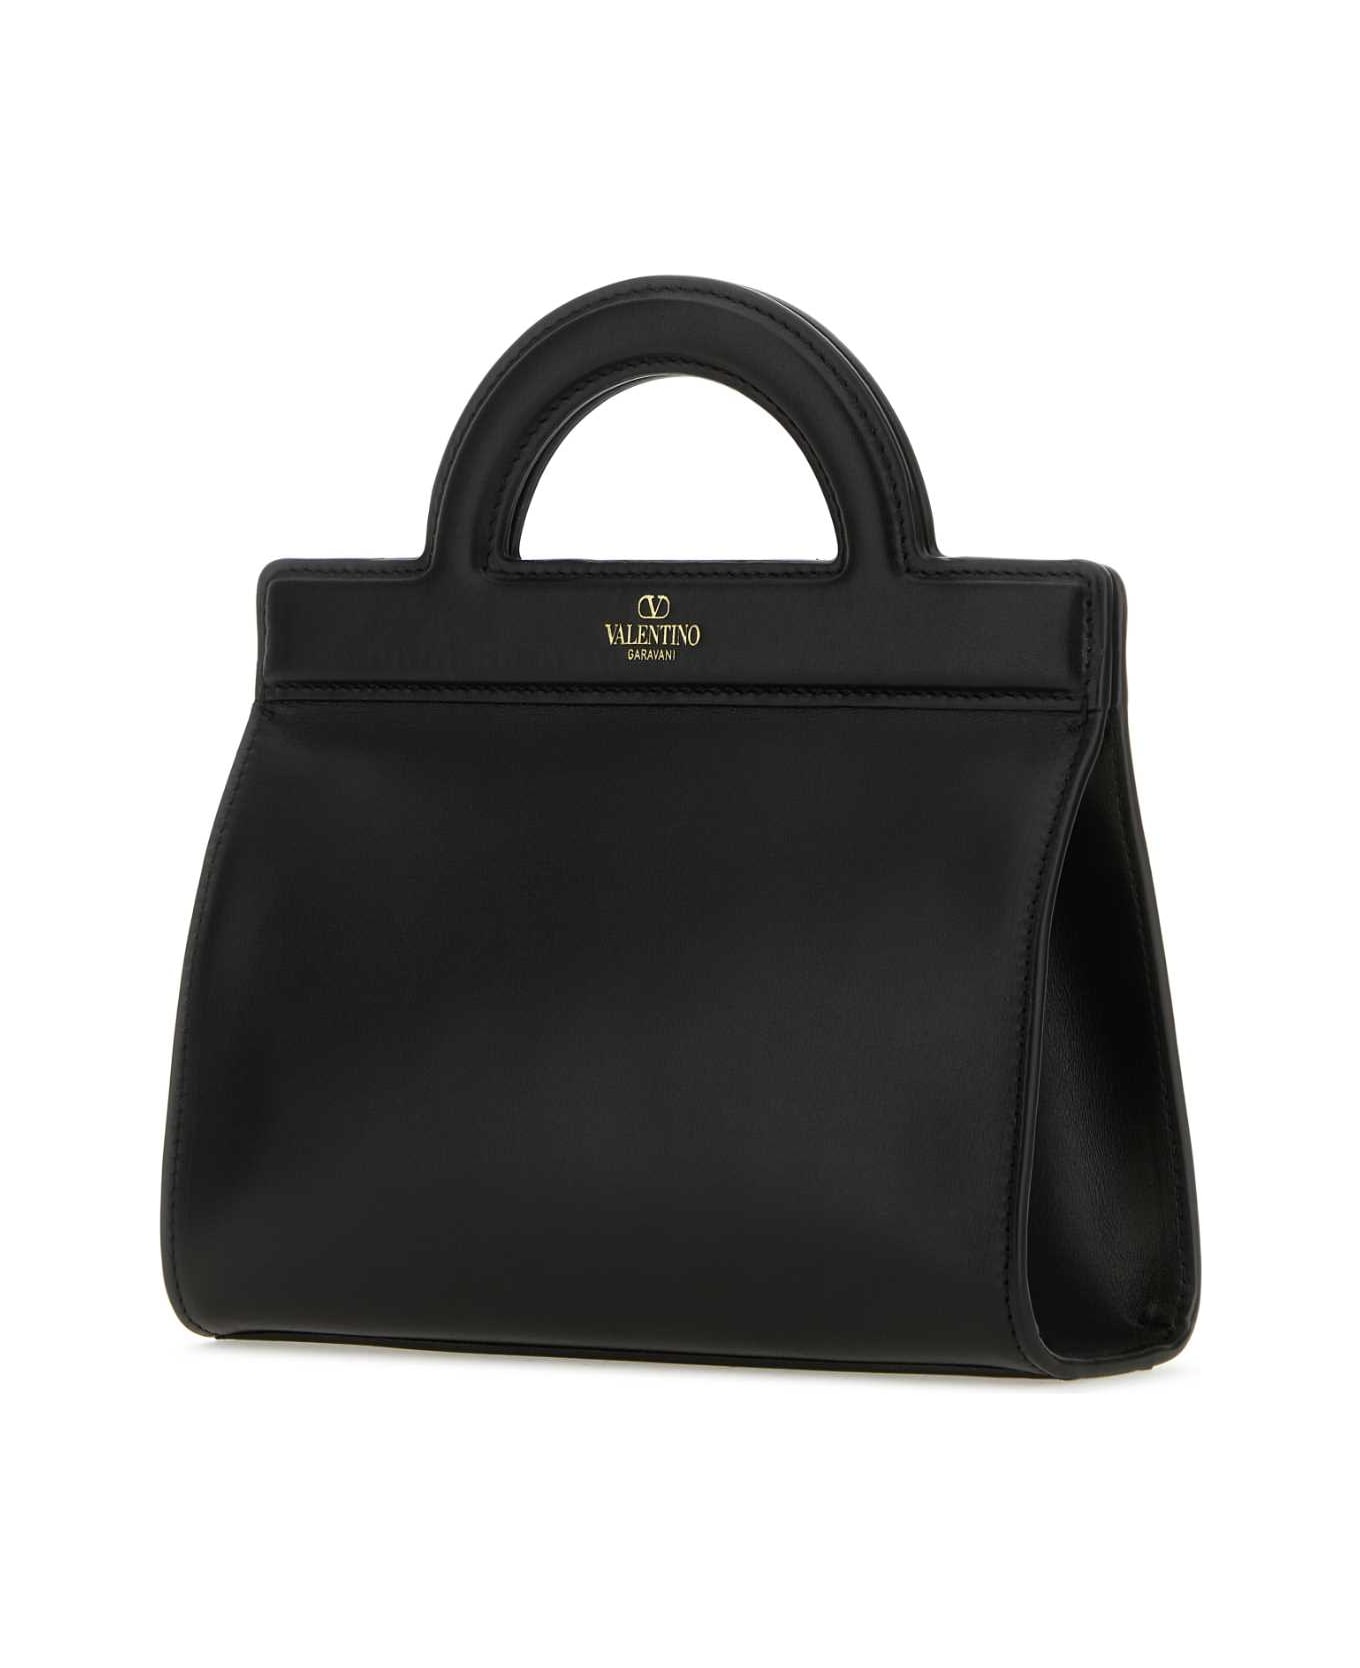 Valentino Garavani Black Leather Handbag - NERO